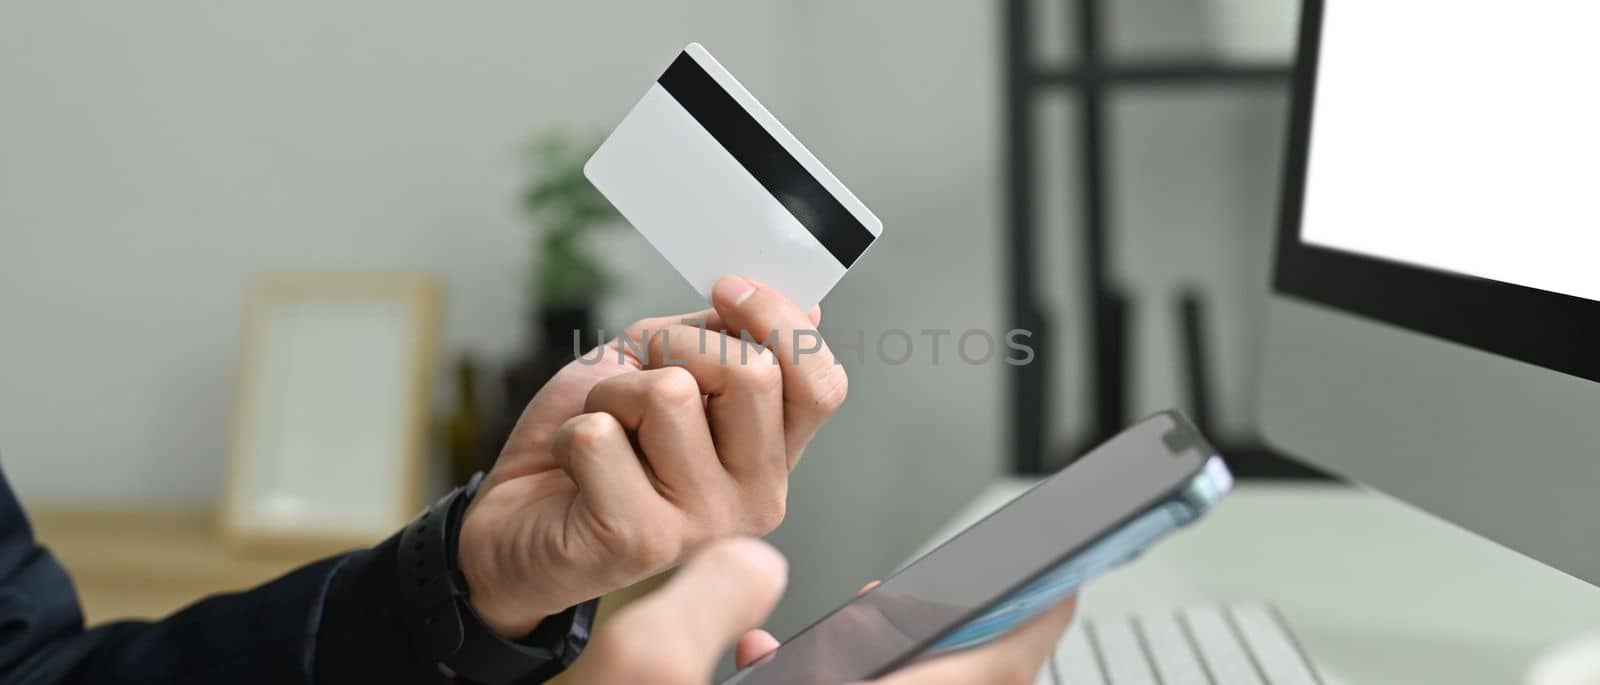 Man holding credit cad and using mobile phone smartphone for online banking transaction or entering data for website form by prathanchorruangsak